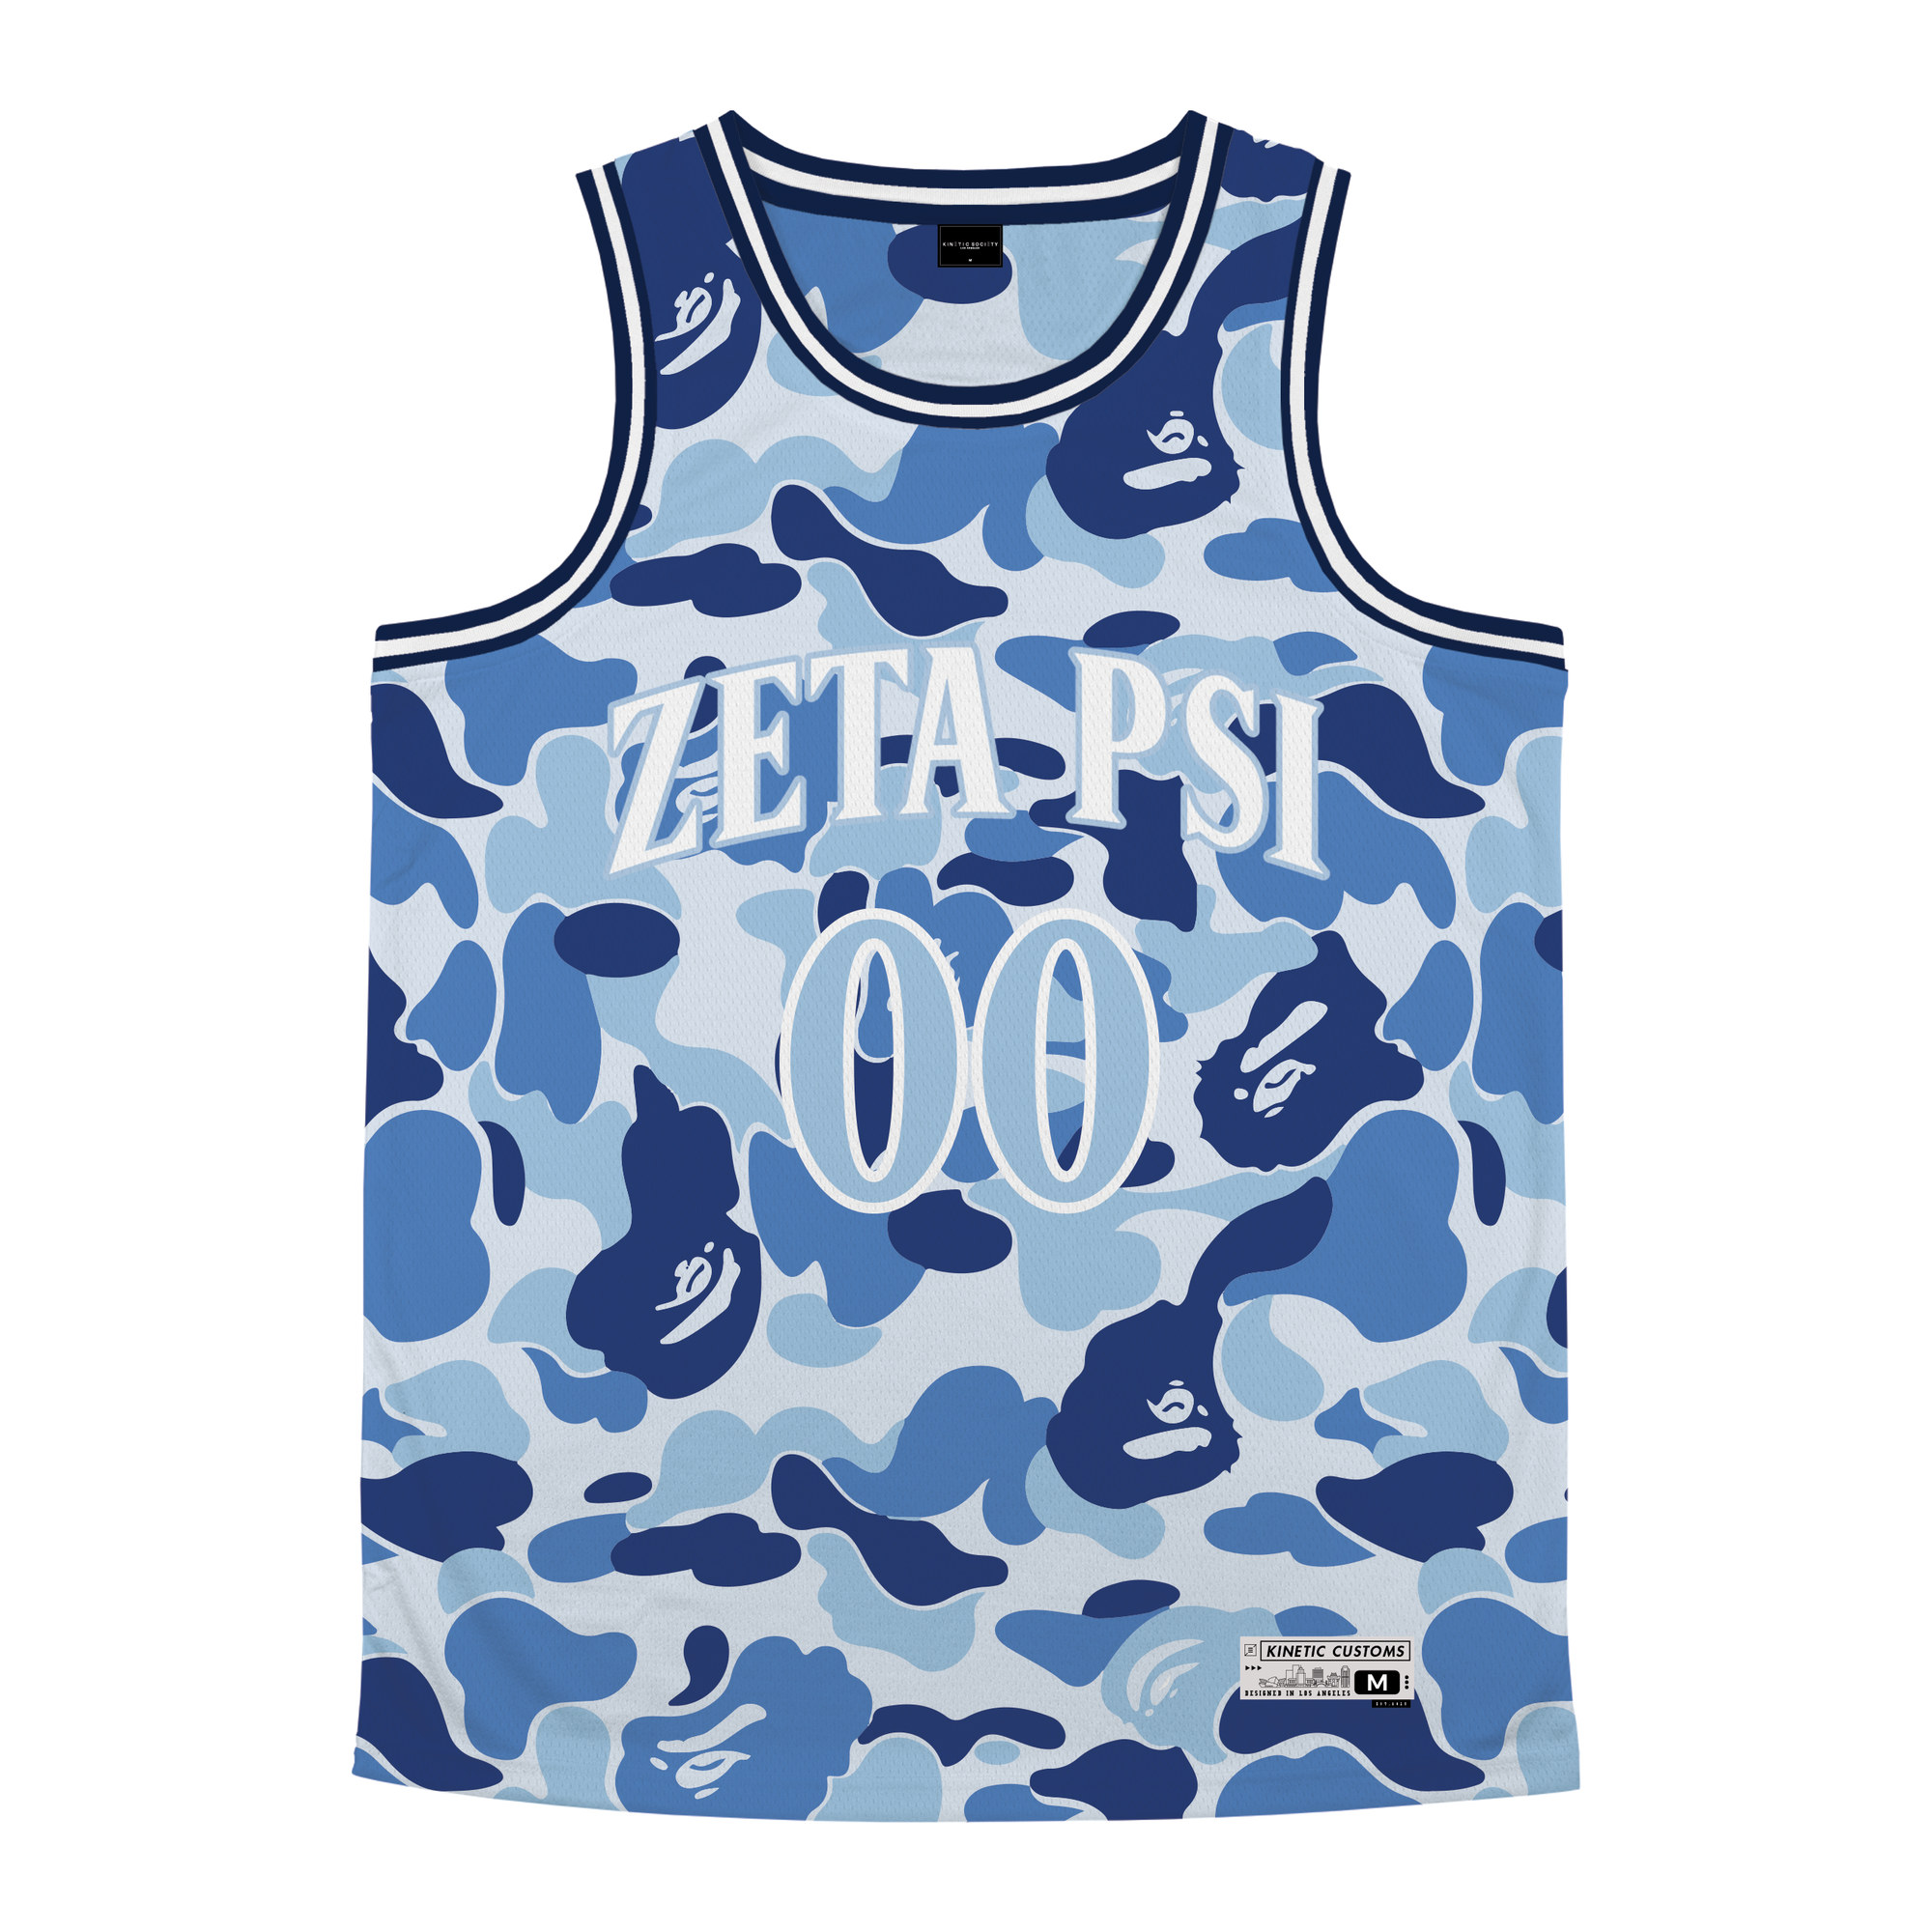 Zeta Psi - Blue Camo Basketball Jersey